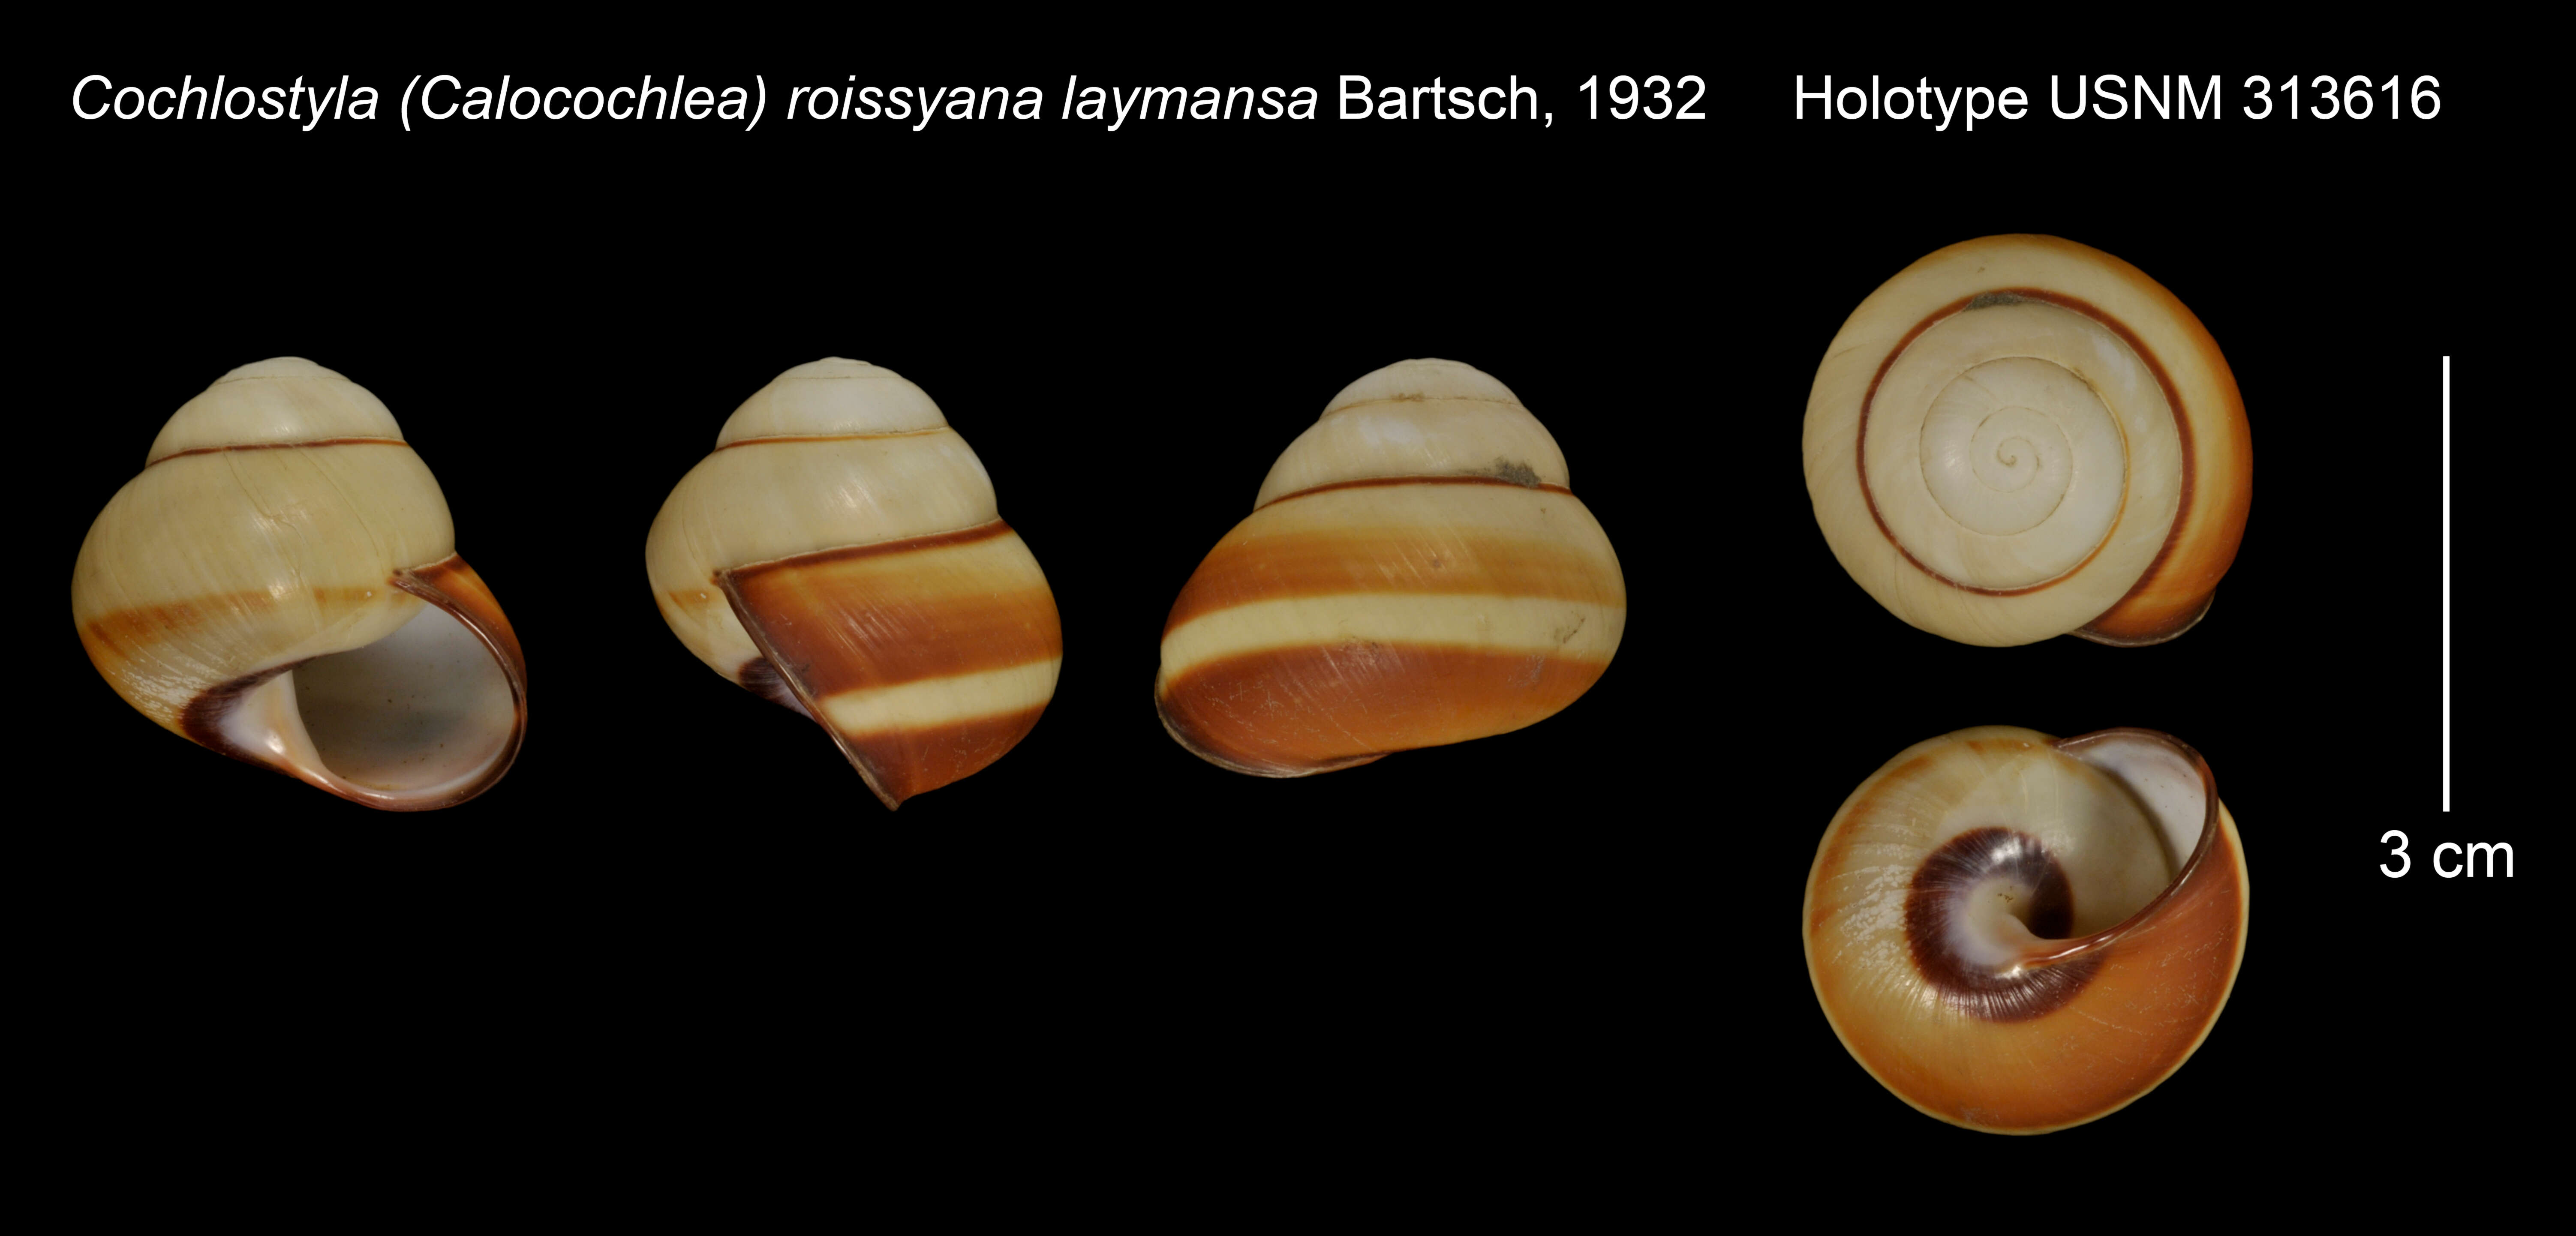 Image of Cochlostyla (Calocochlea) roissyana laymansa Bartsch